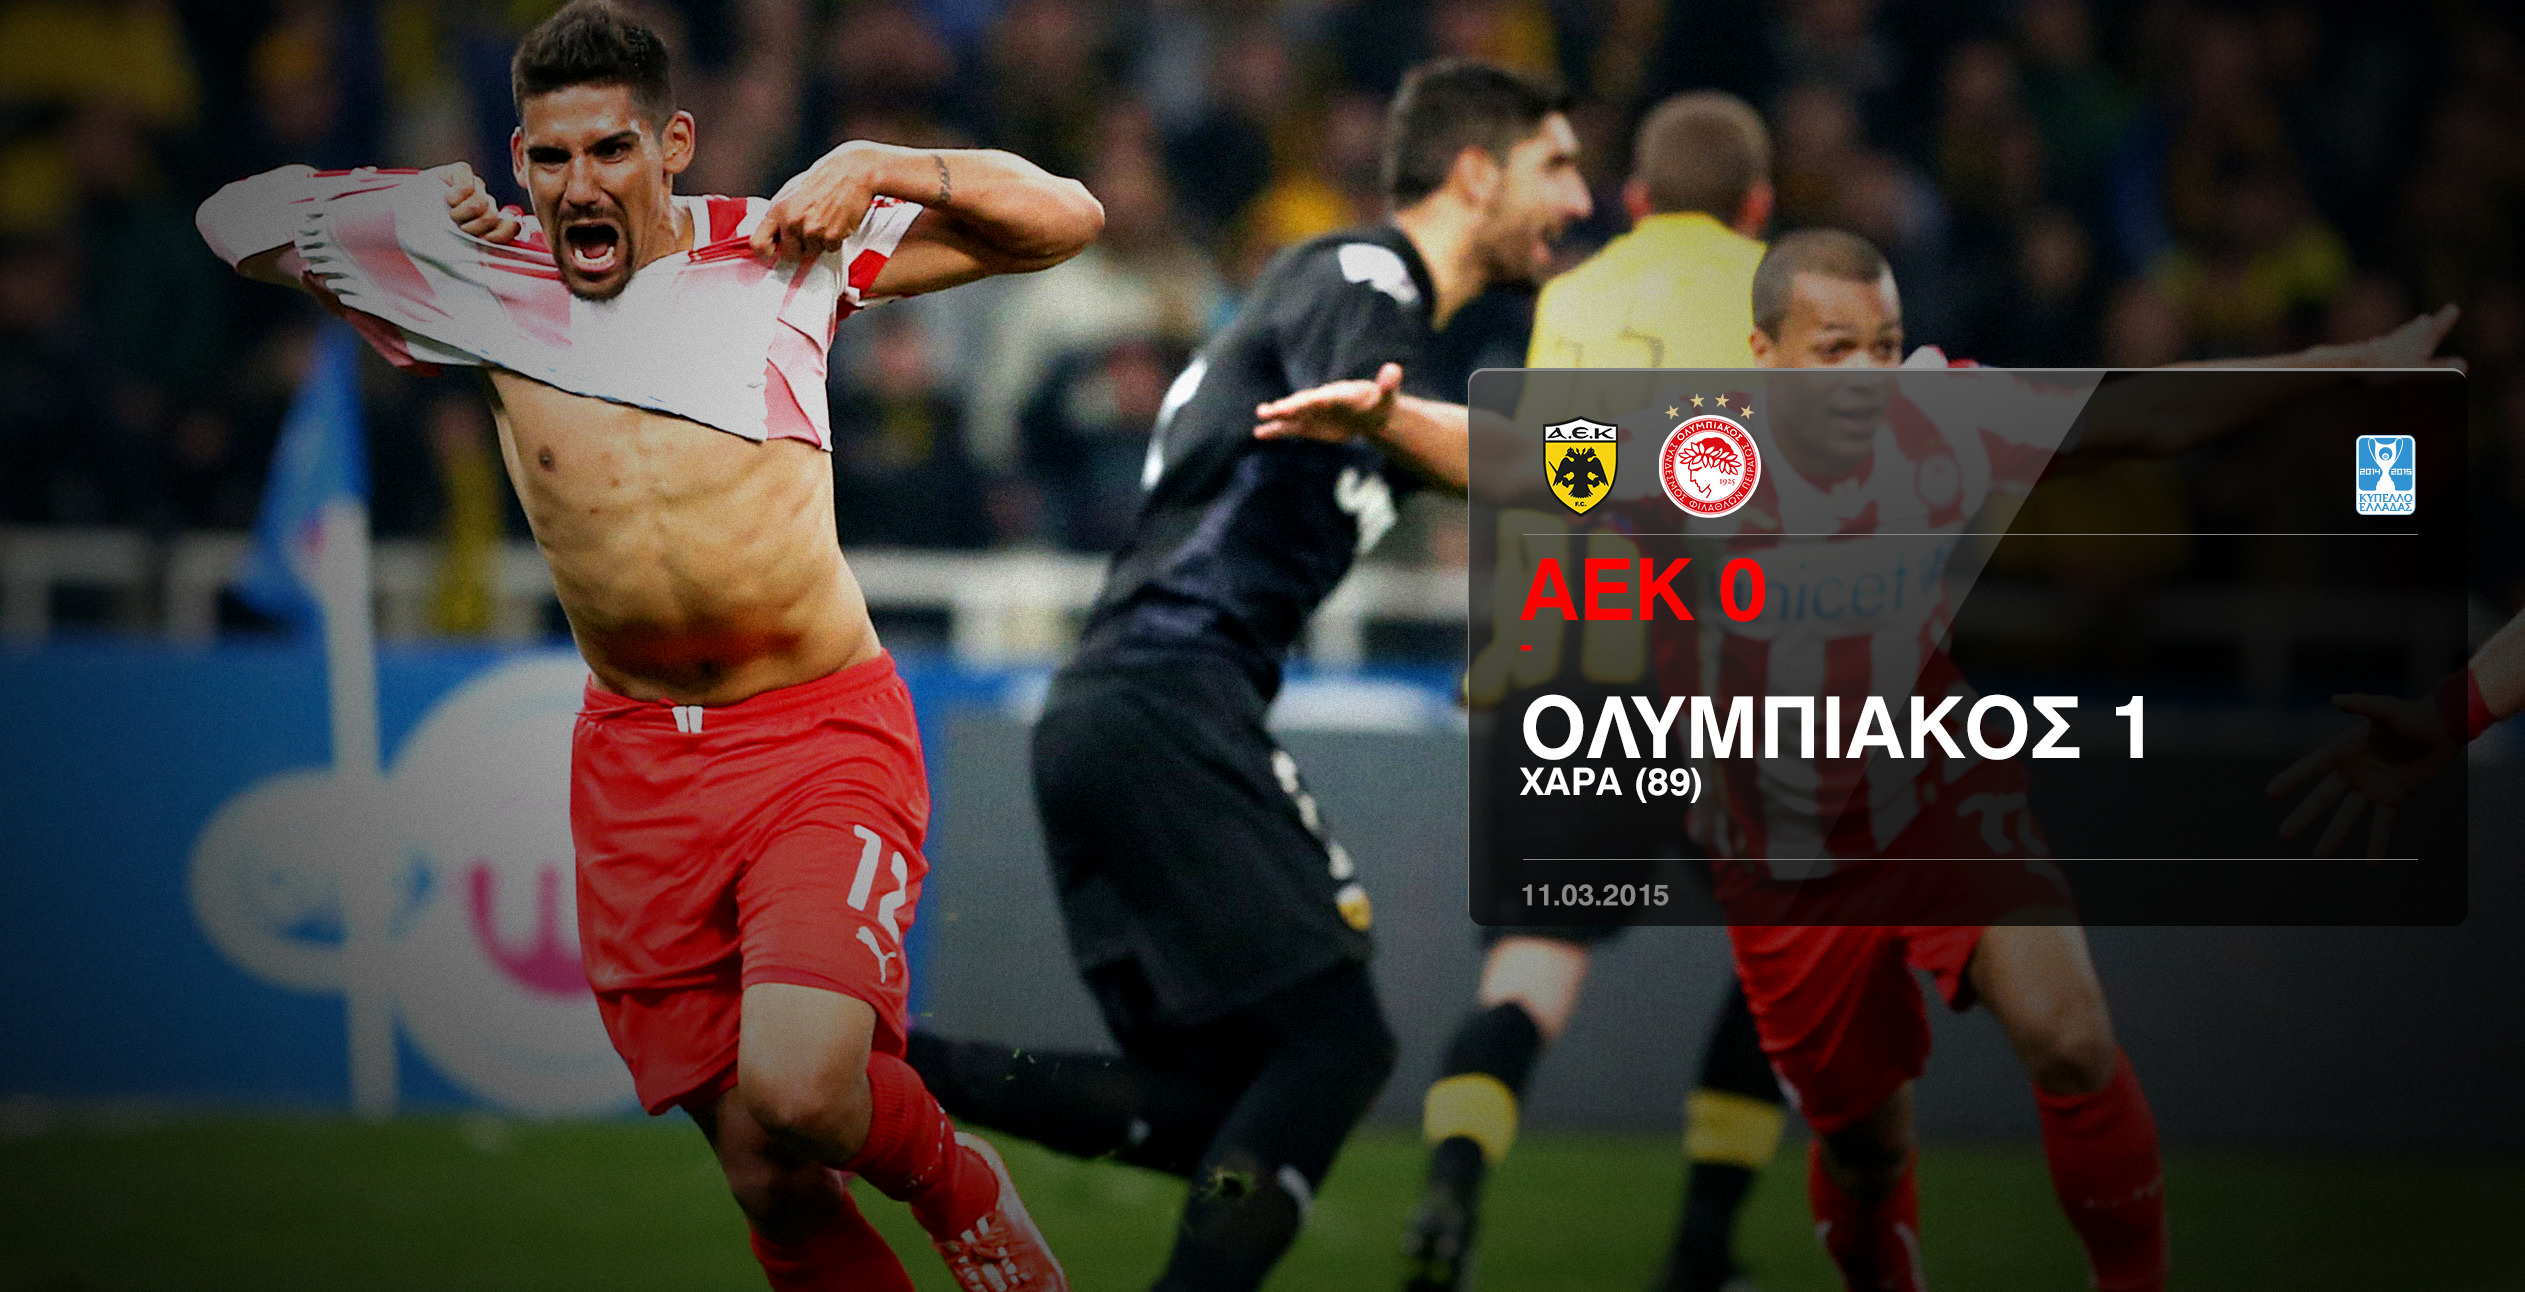 AEK – Olympiacos 0-1 (interrompu)